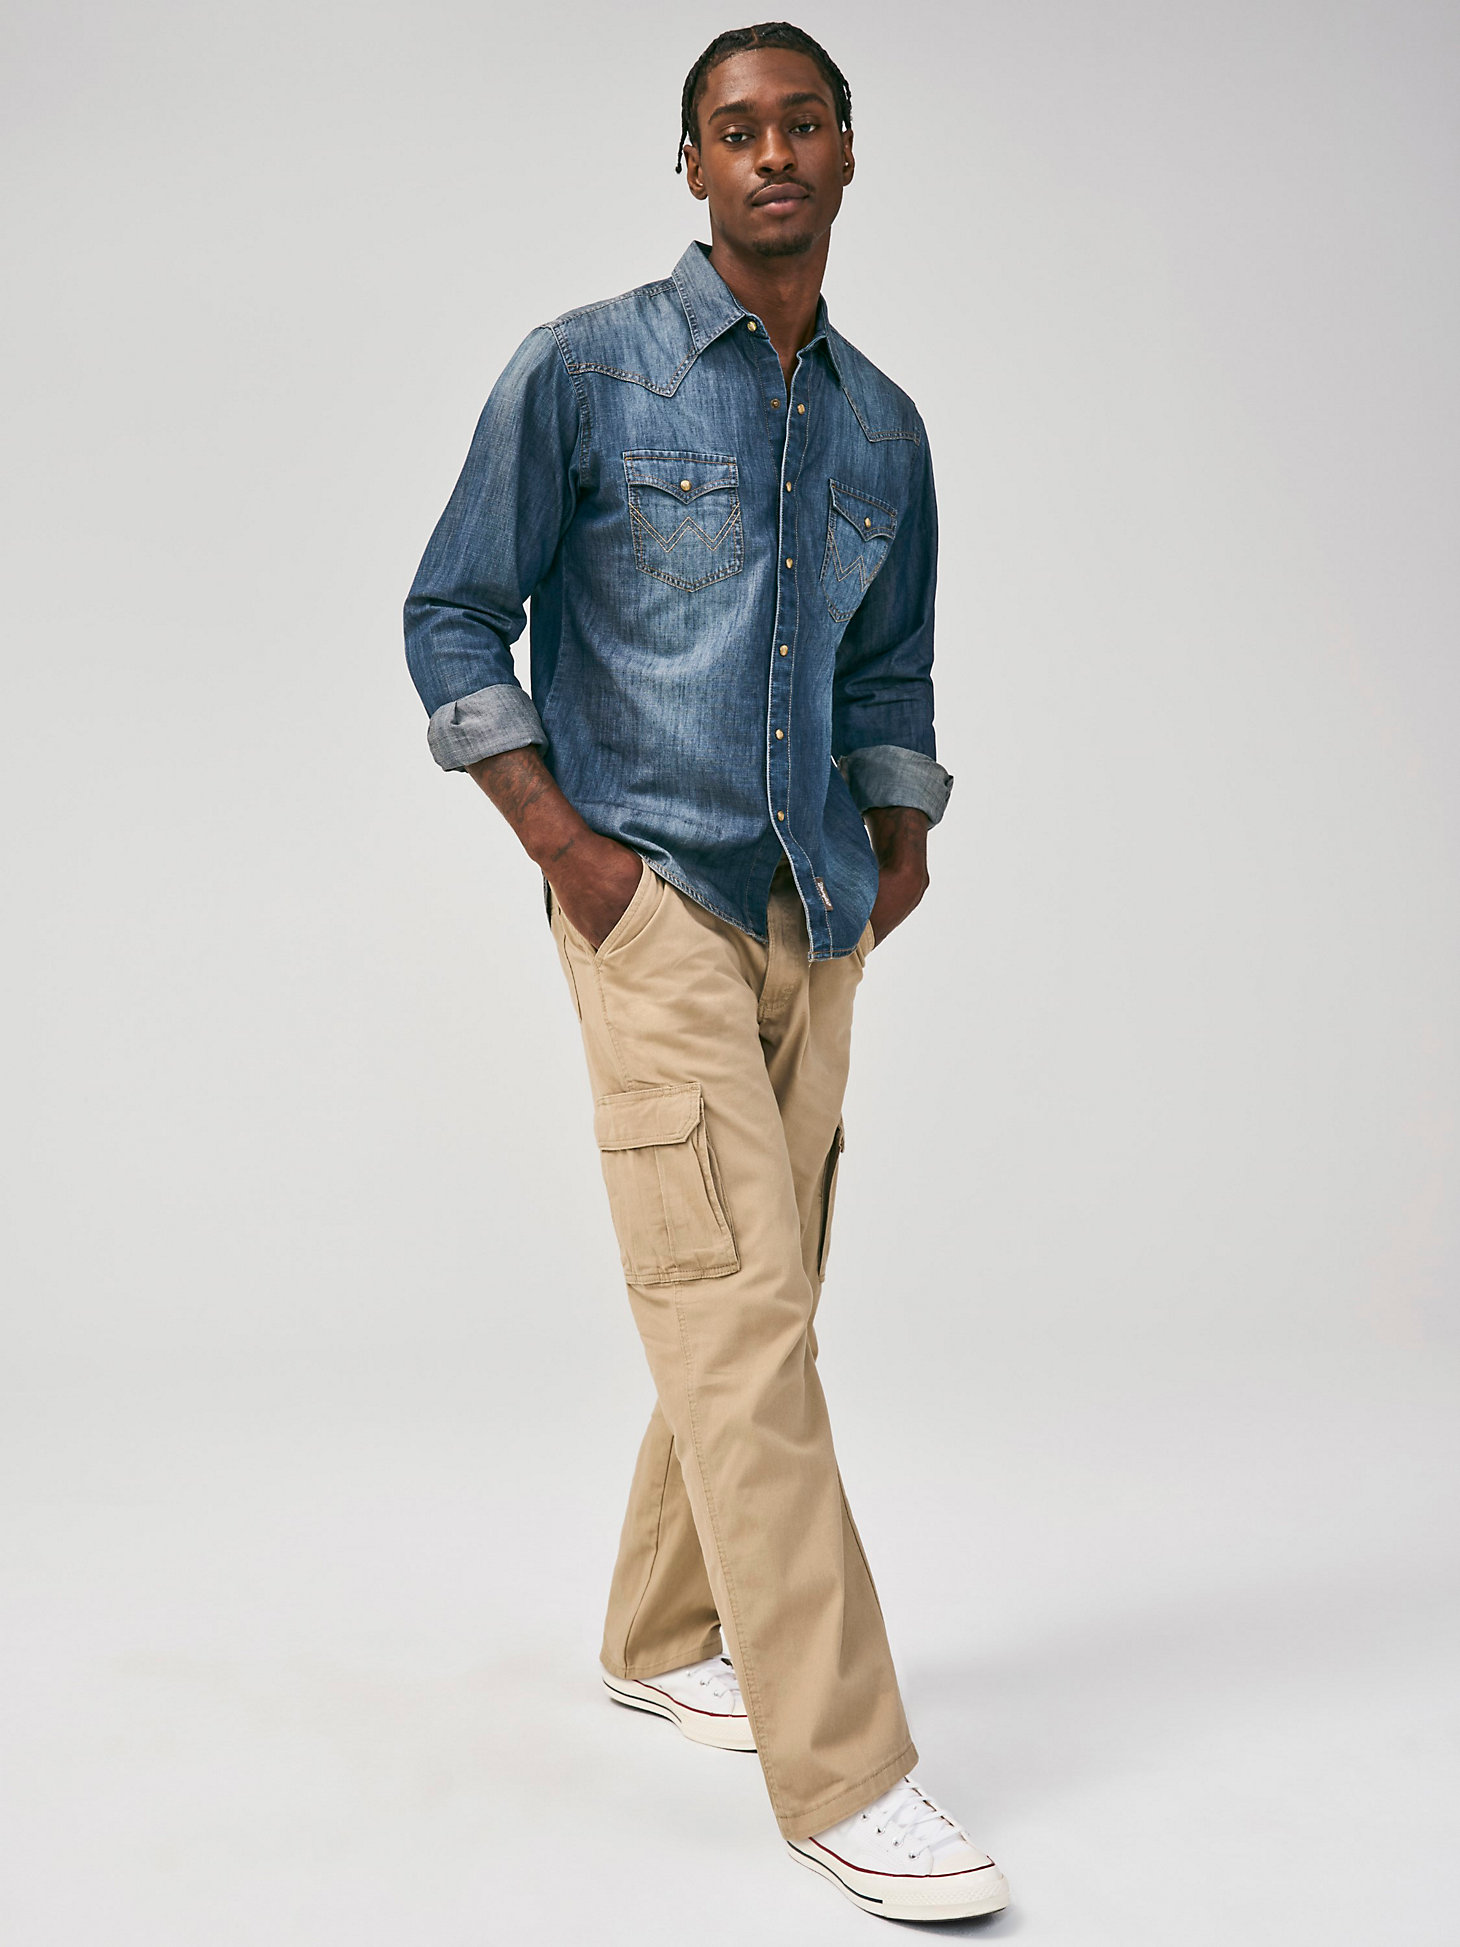 Men’s Wrangler Retro® Long Sleeve Blue Denim Western Shirt in Blue Denim alternative view 1